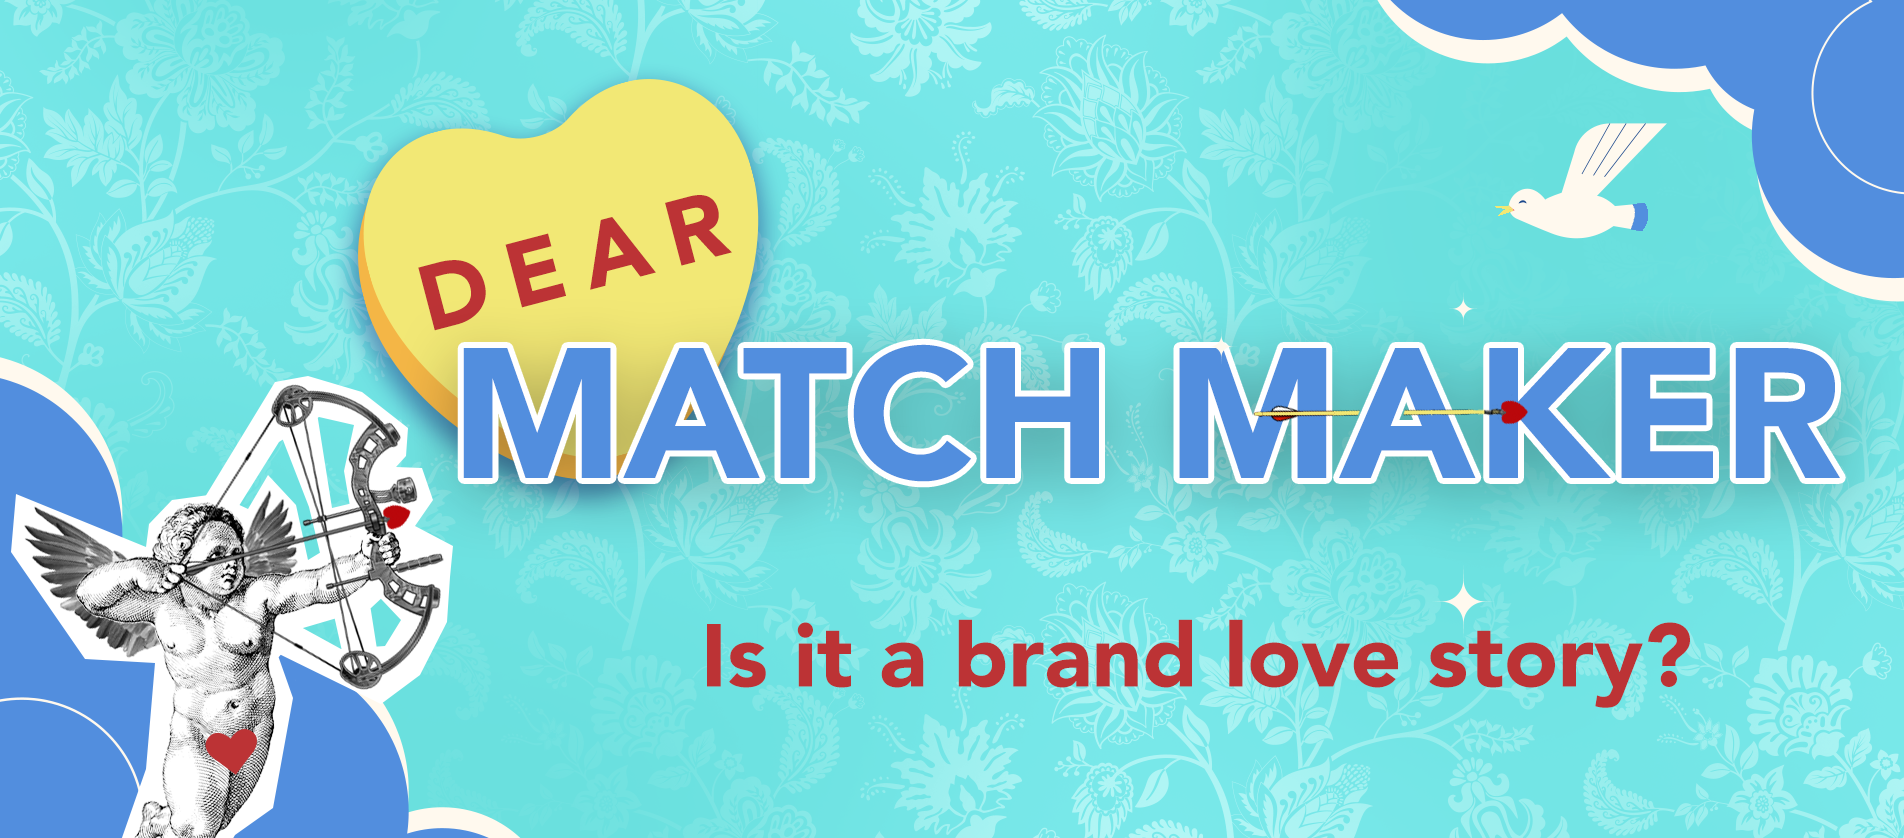 Dear Match Maker - Is it a brand love story?